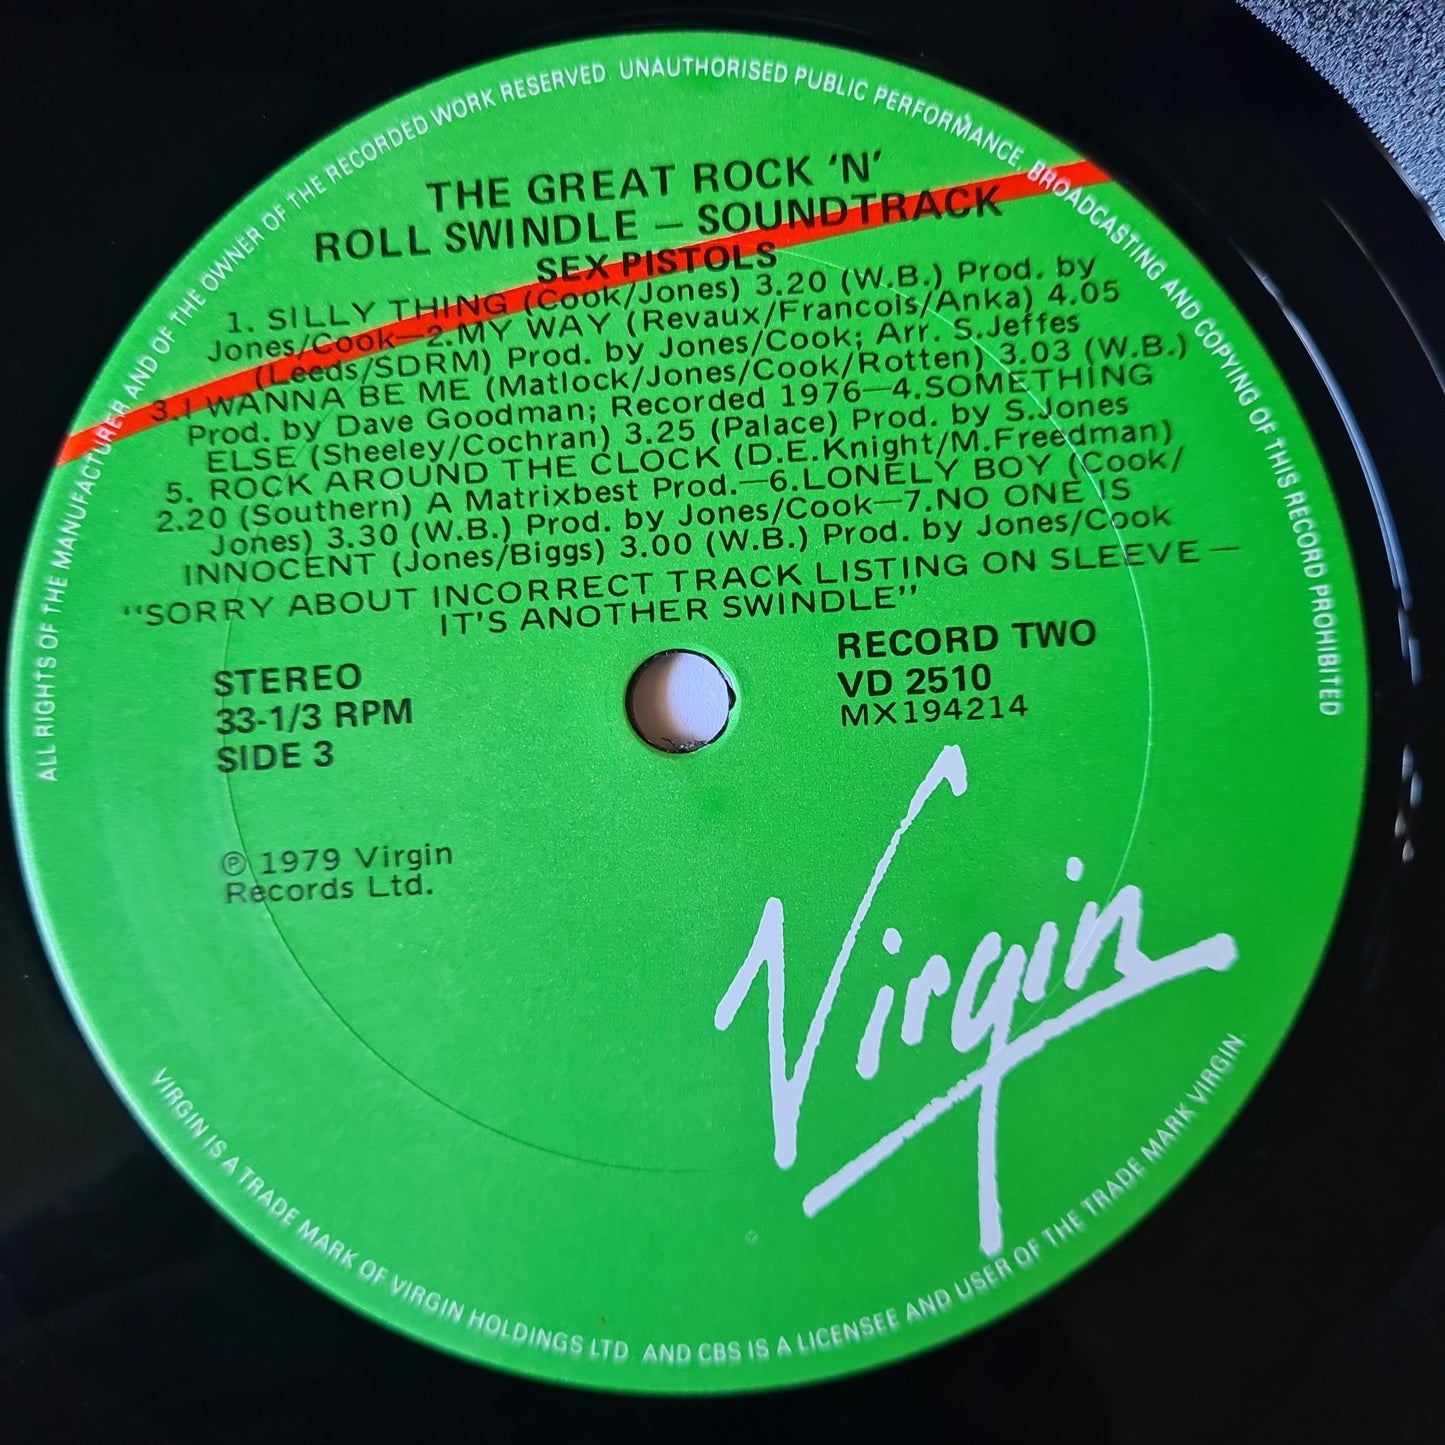 Sex Pistols – The Great Rock 'N' Roll Swindle - 1981 (2LP Gatefold) - Vinyl Record